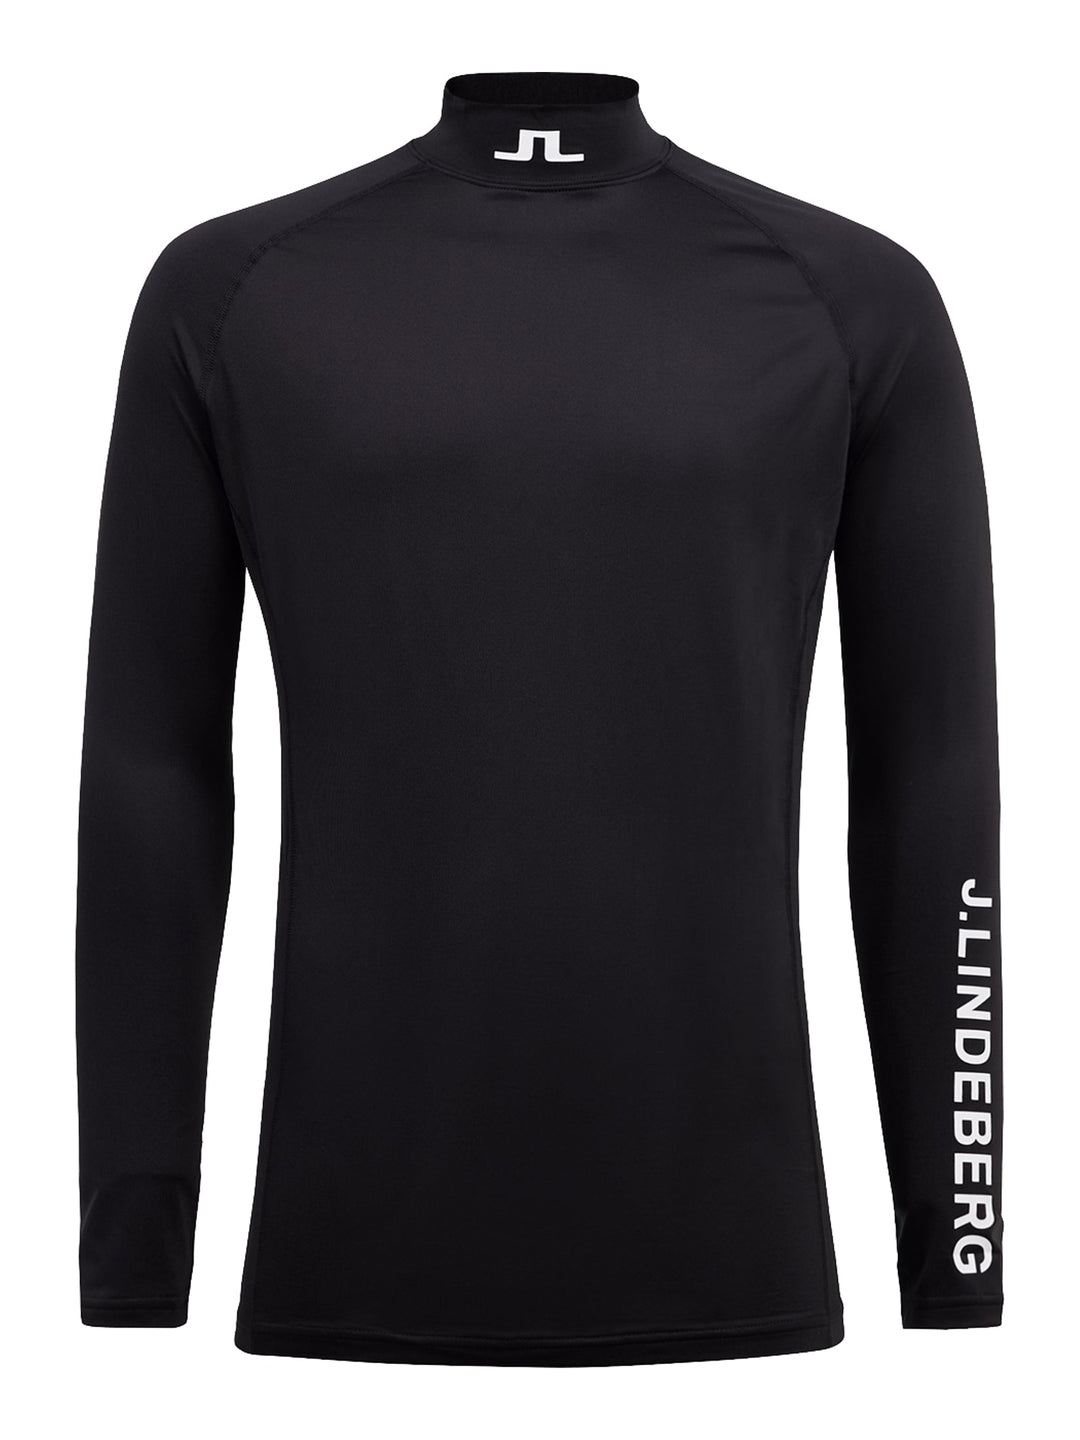 J.Lindeberg Mens Aello Soft Compression Shirt - BLACK - Golf Anything Canada